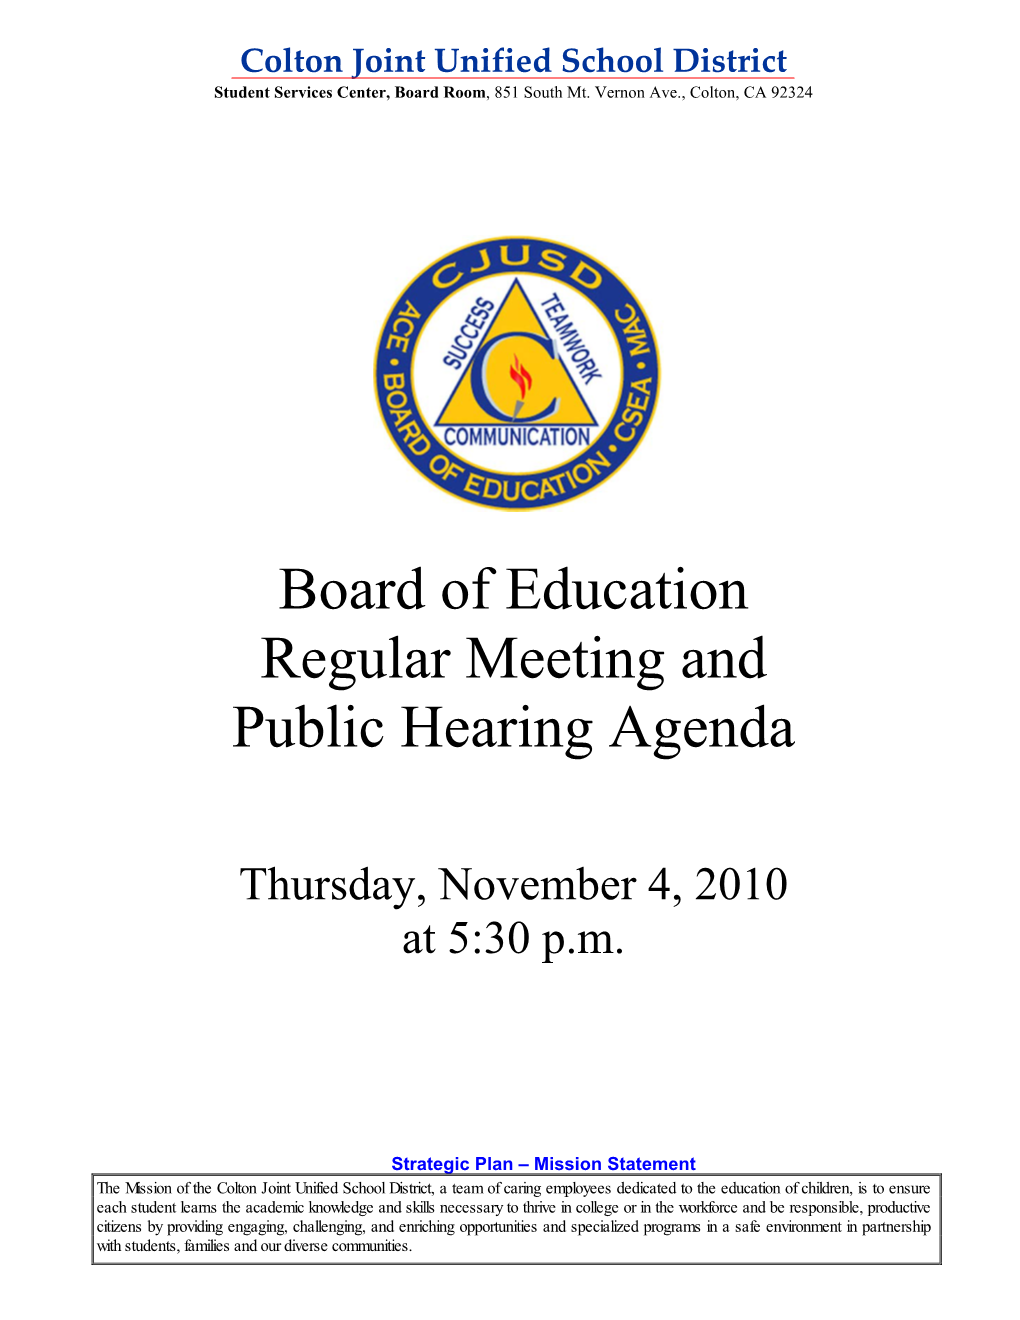 Board of Education Regular Meeting and Public Hearing Agenda